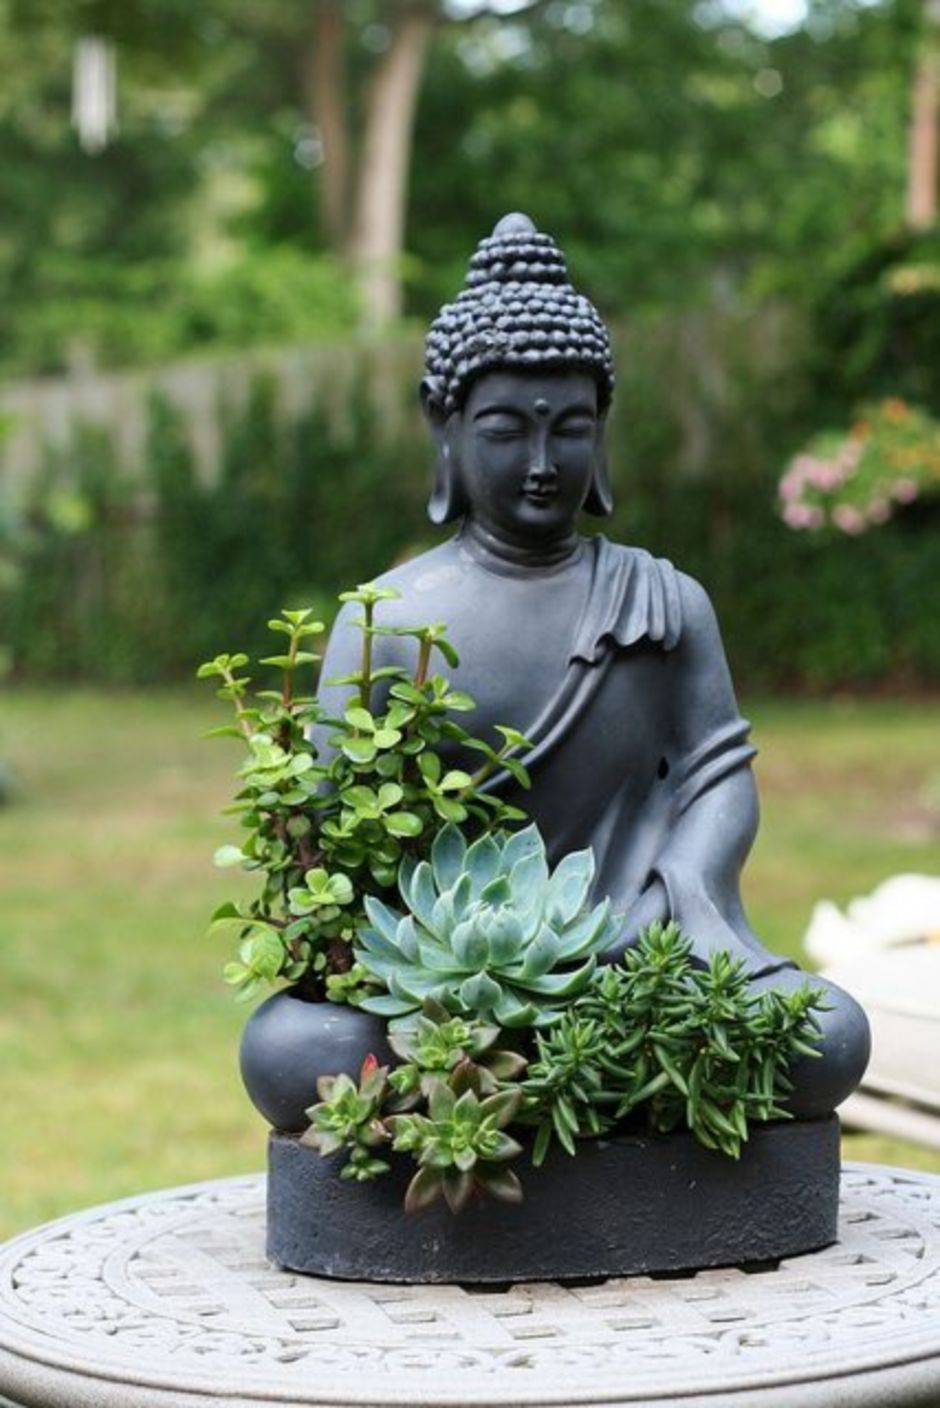 Magical Peaceful Zen Garden Designs